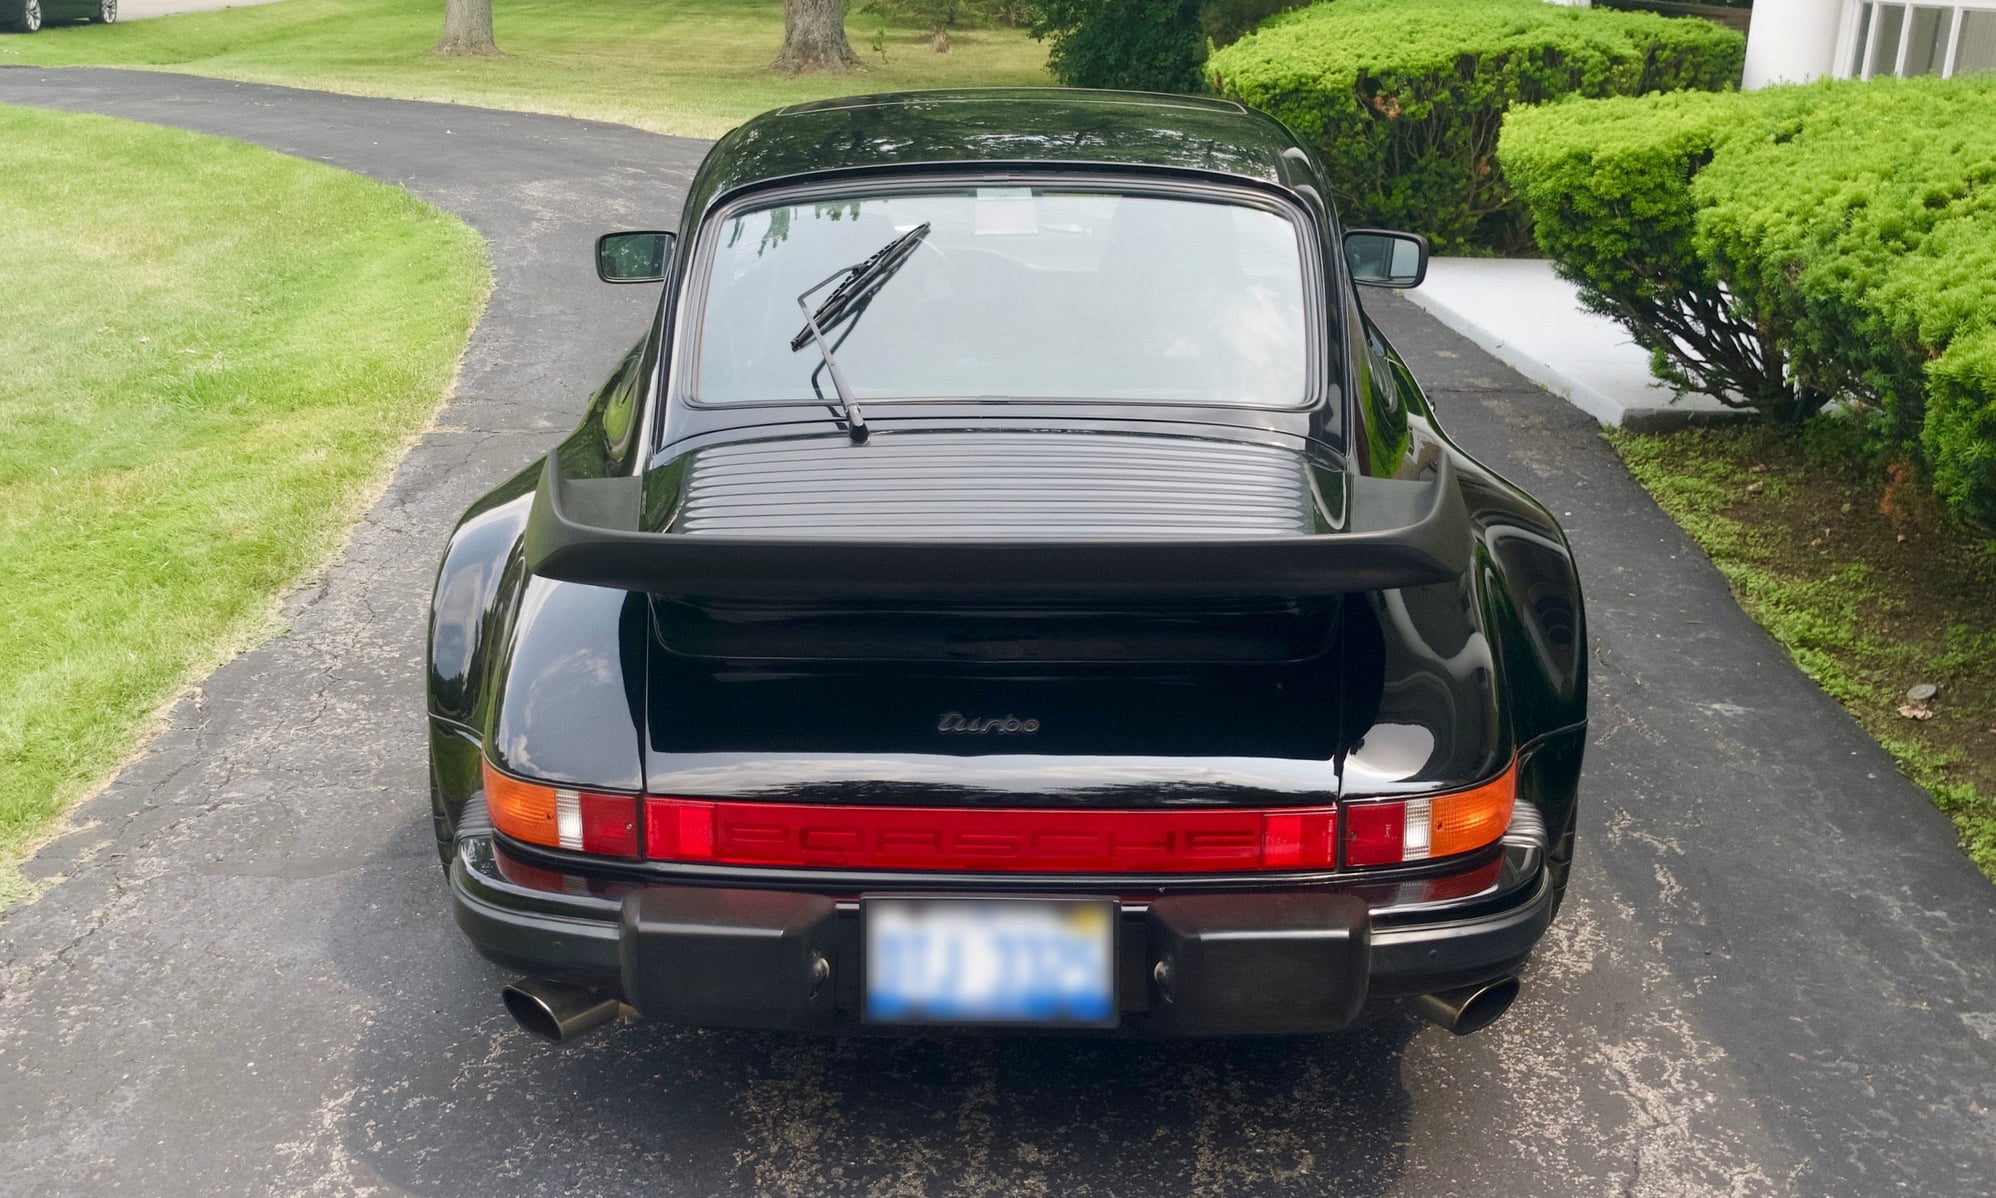 1984 Porsche 911 - 1984 Porsche M941 Turbo Look w/ 3.3L Turbo Engine - Used - VIN WP0AB0919ES121468 - 58,204 Miles - 2WD - Manual - Coupe - Black - Metro Detroit, MI 48076, United States